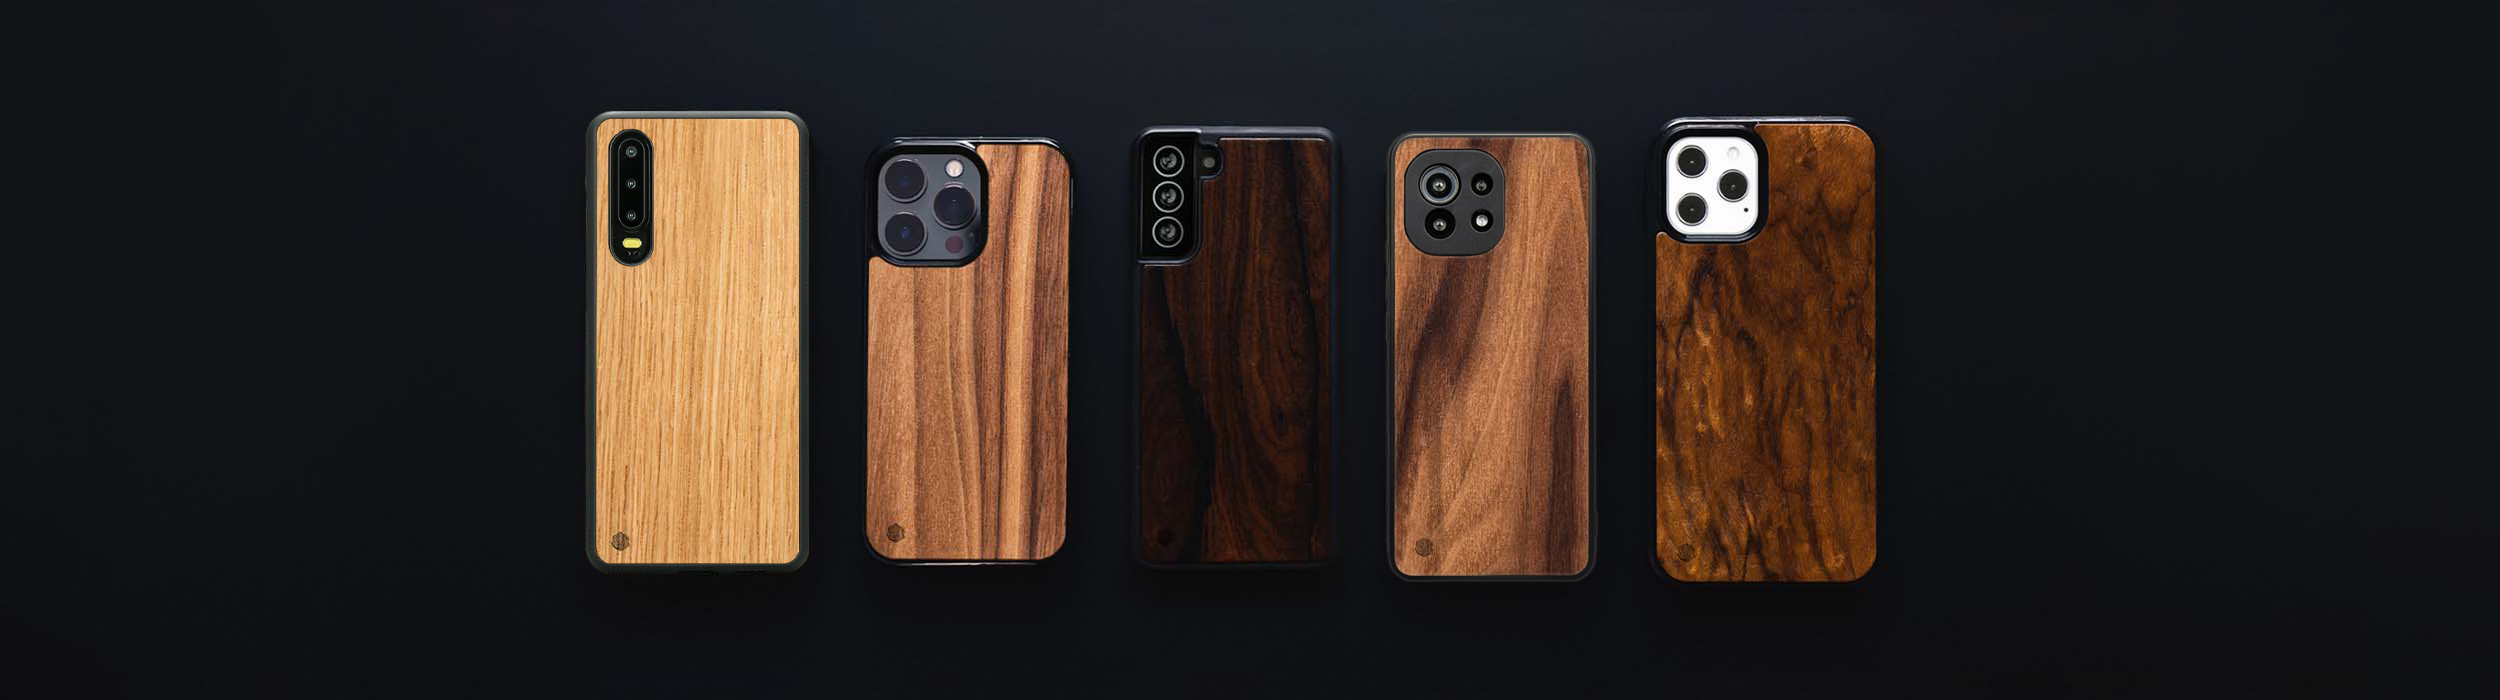 Xiaomi Mi 10 Wooden Phone Cases